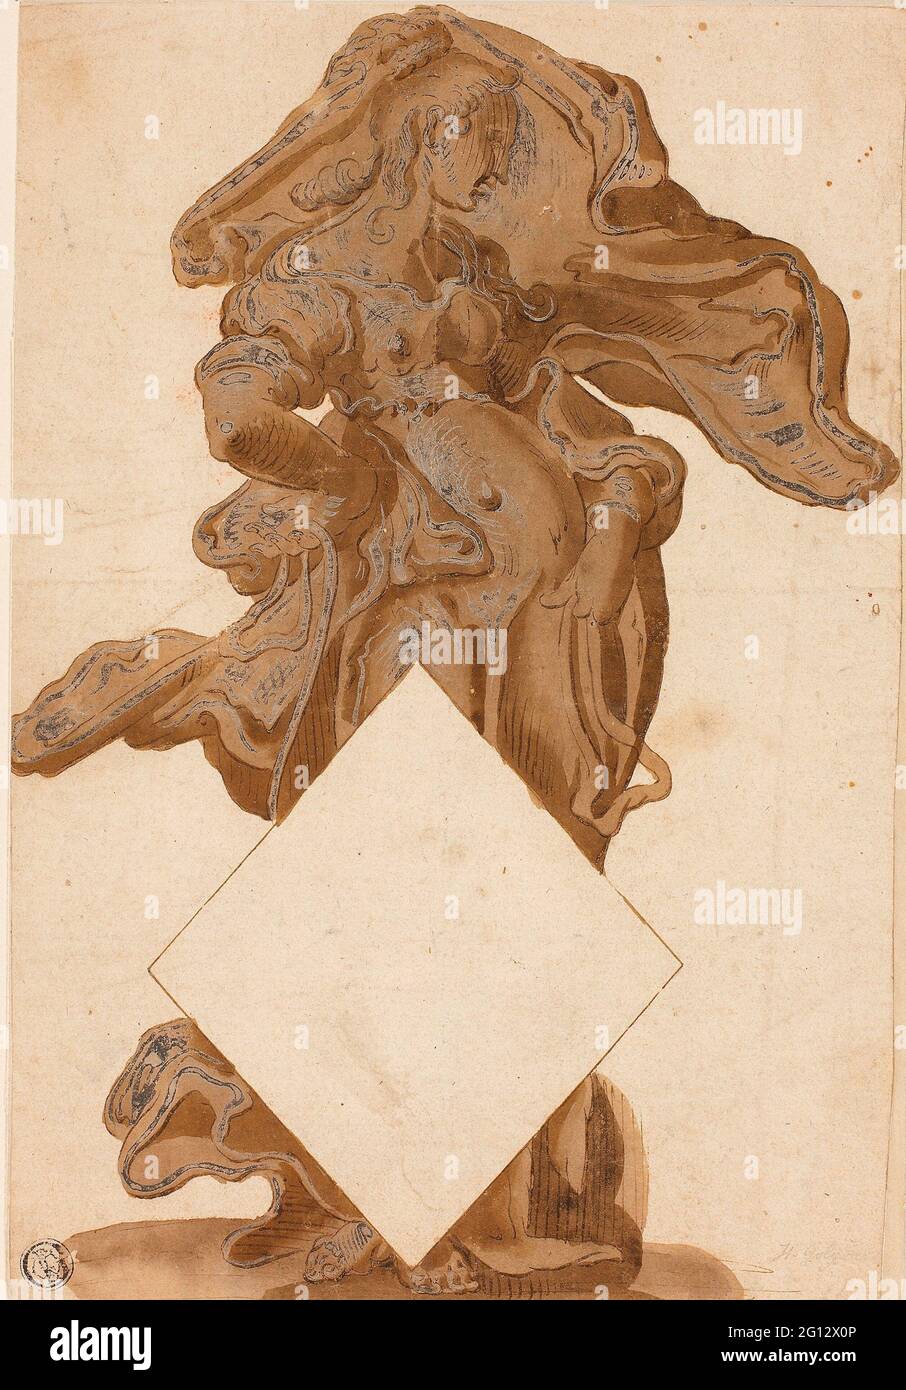 Hendrick Goltzius. Design with Female Figure in Flowing Drapery - Possibly Hendrick Goltzius (Dutch, 1558-1617) or Hubrecht Goltzius (German, Stock Photo